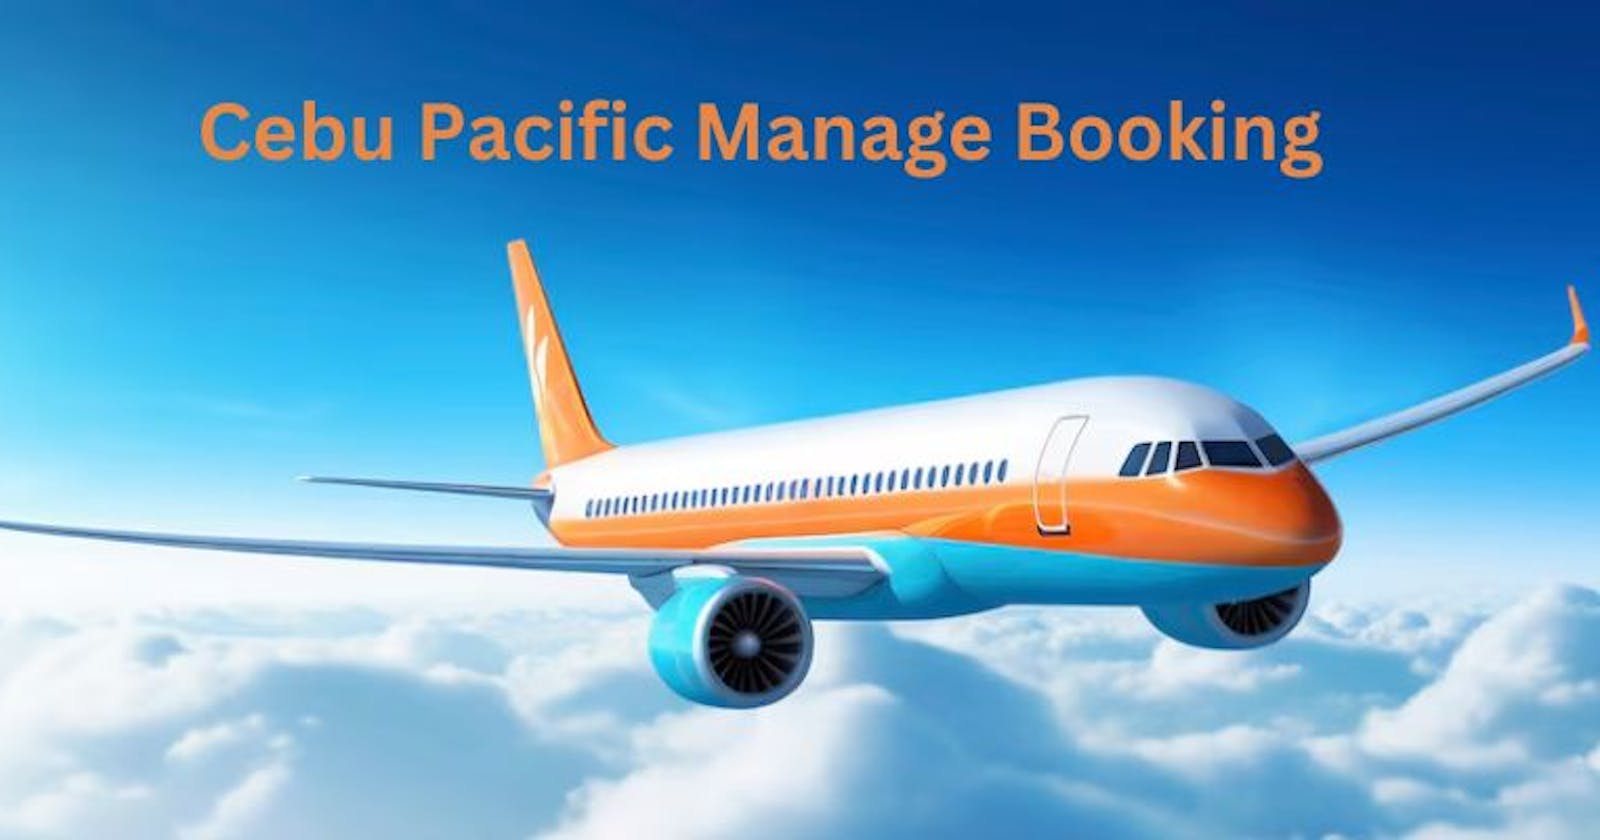 Explore the Cebu Pacific Manage Booking